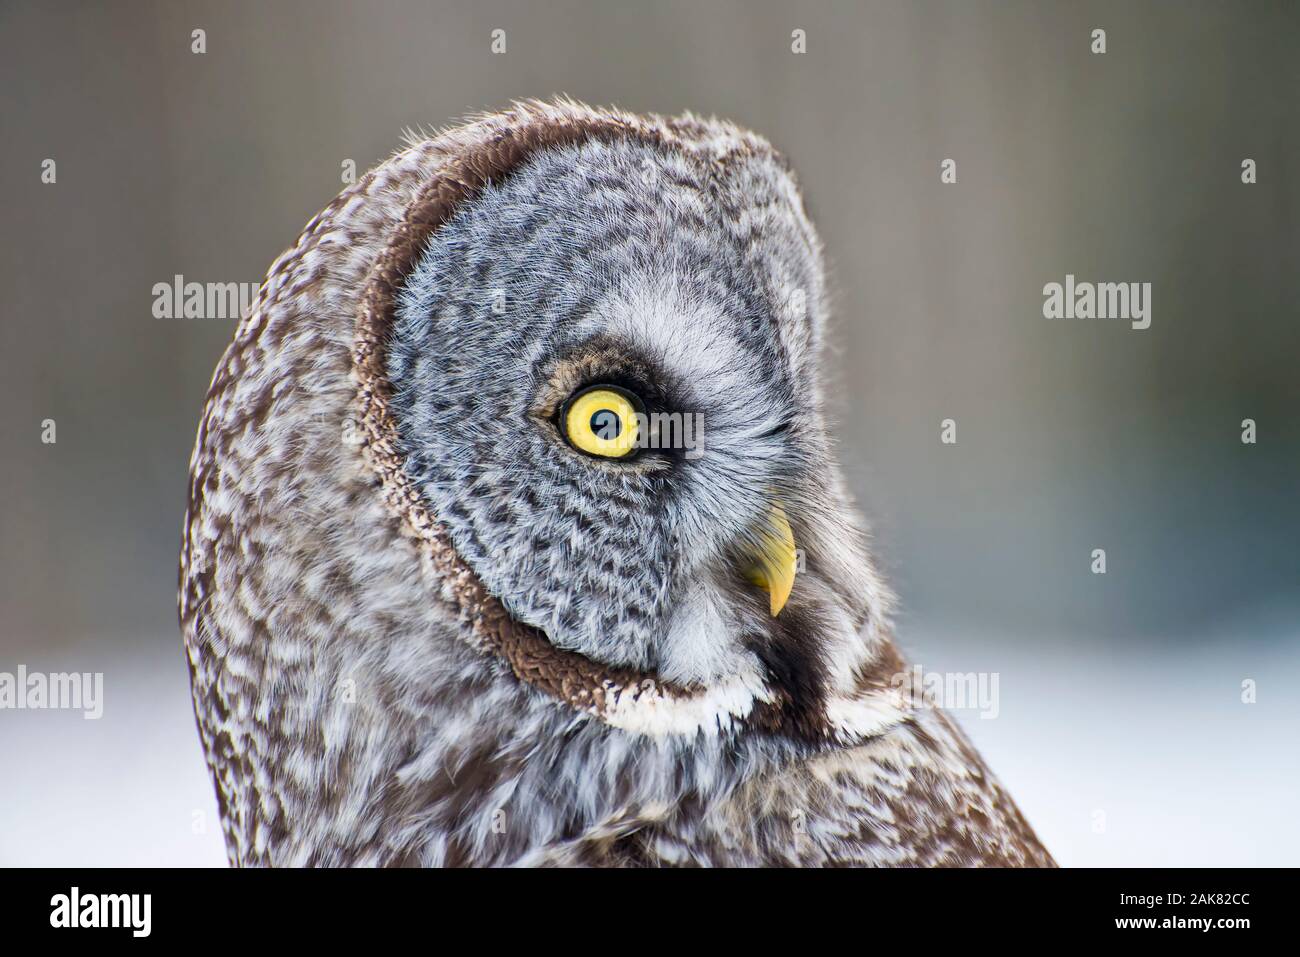 Great Gray Owl closeup portrait. Stock Photo